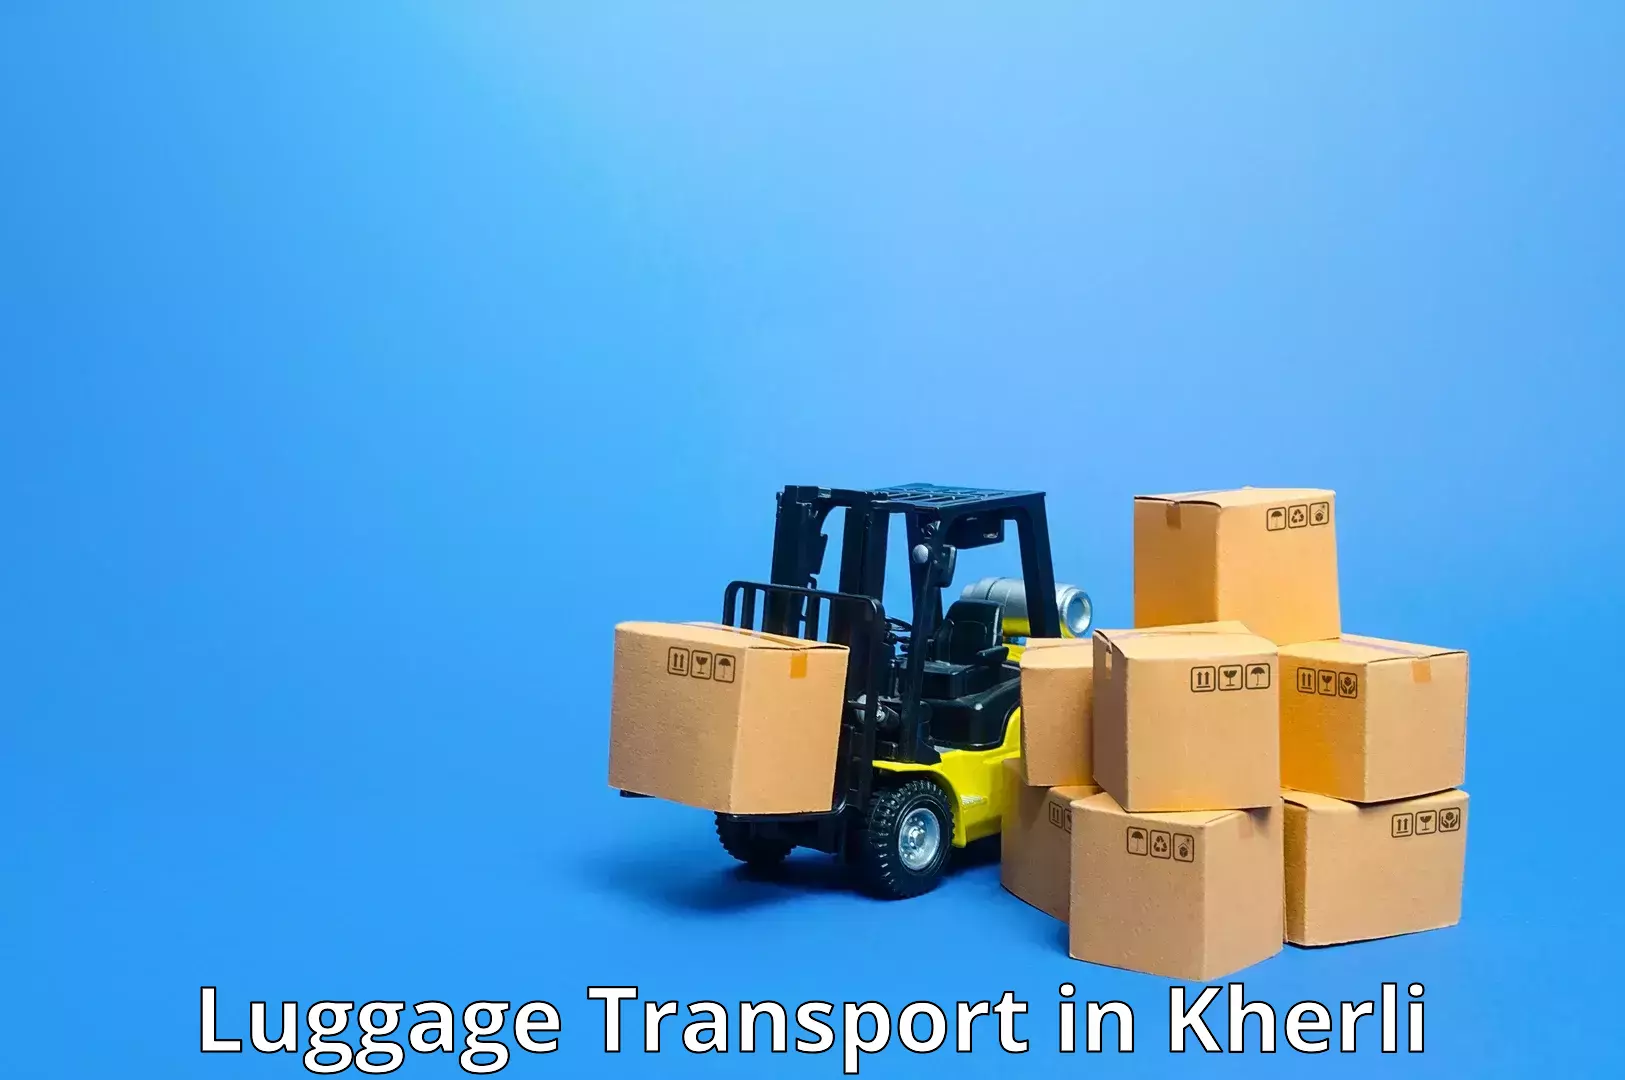 Luggage transport operations in Kherli